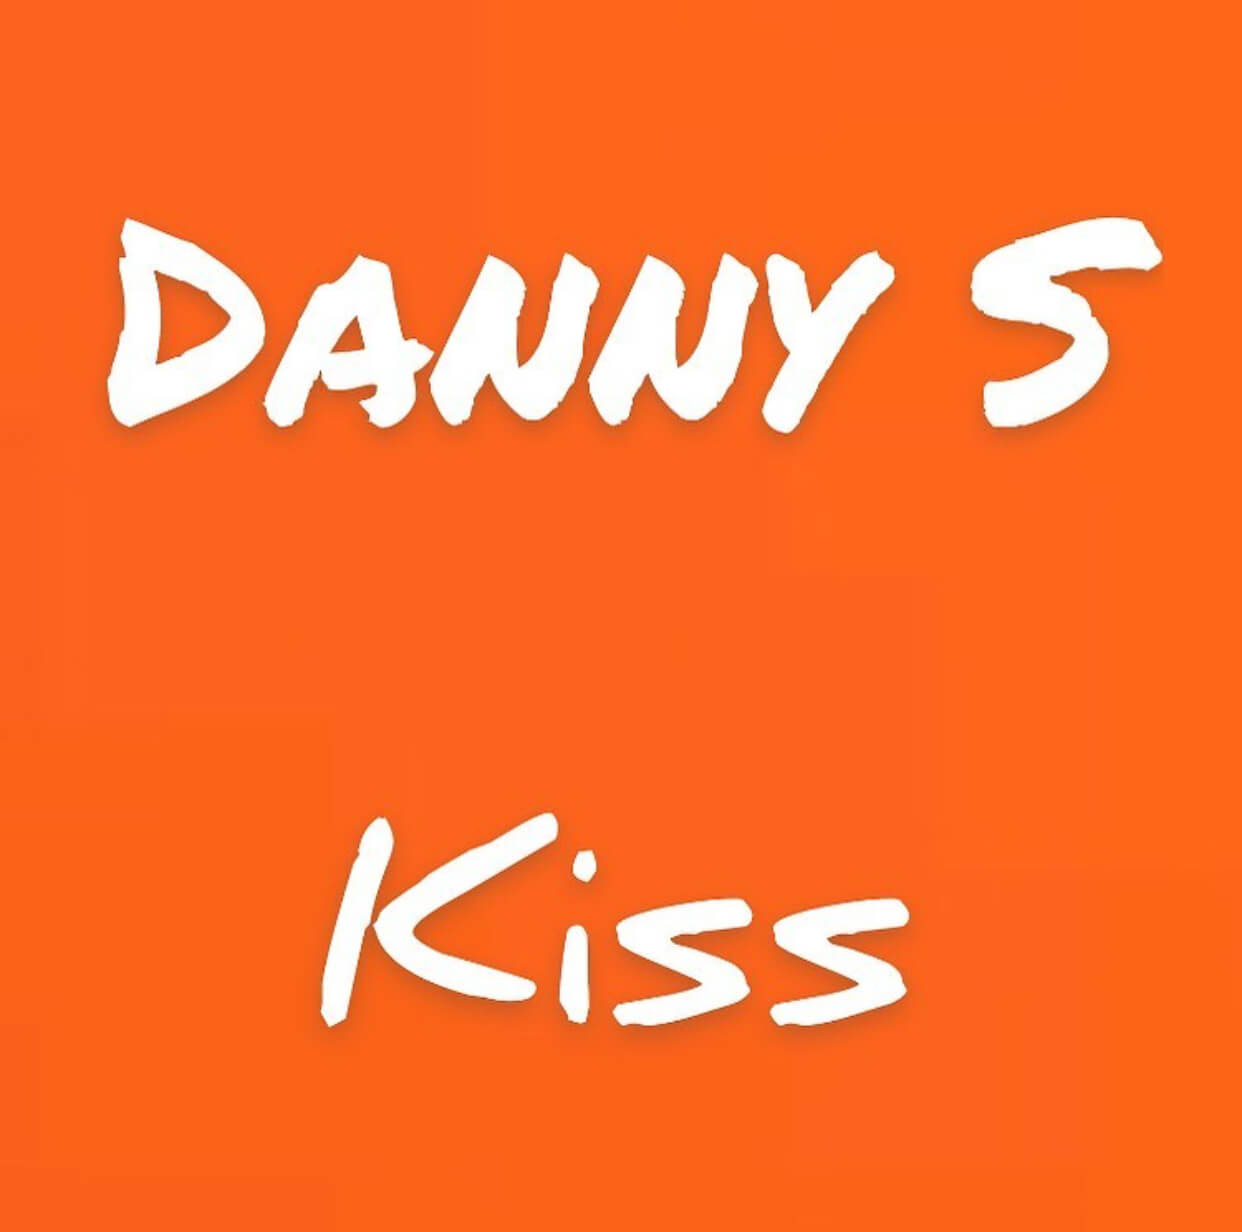 Danny S - Kiss